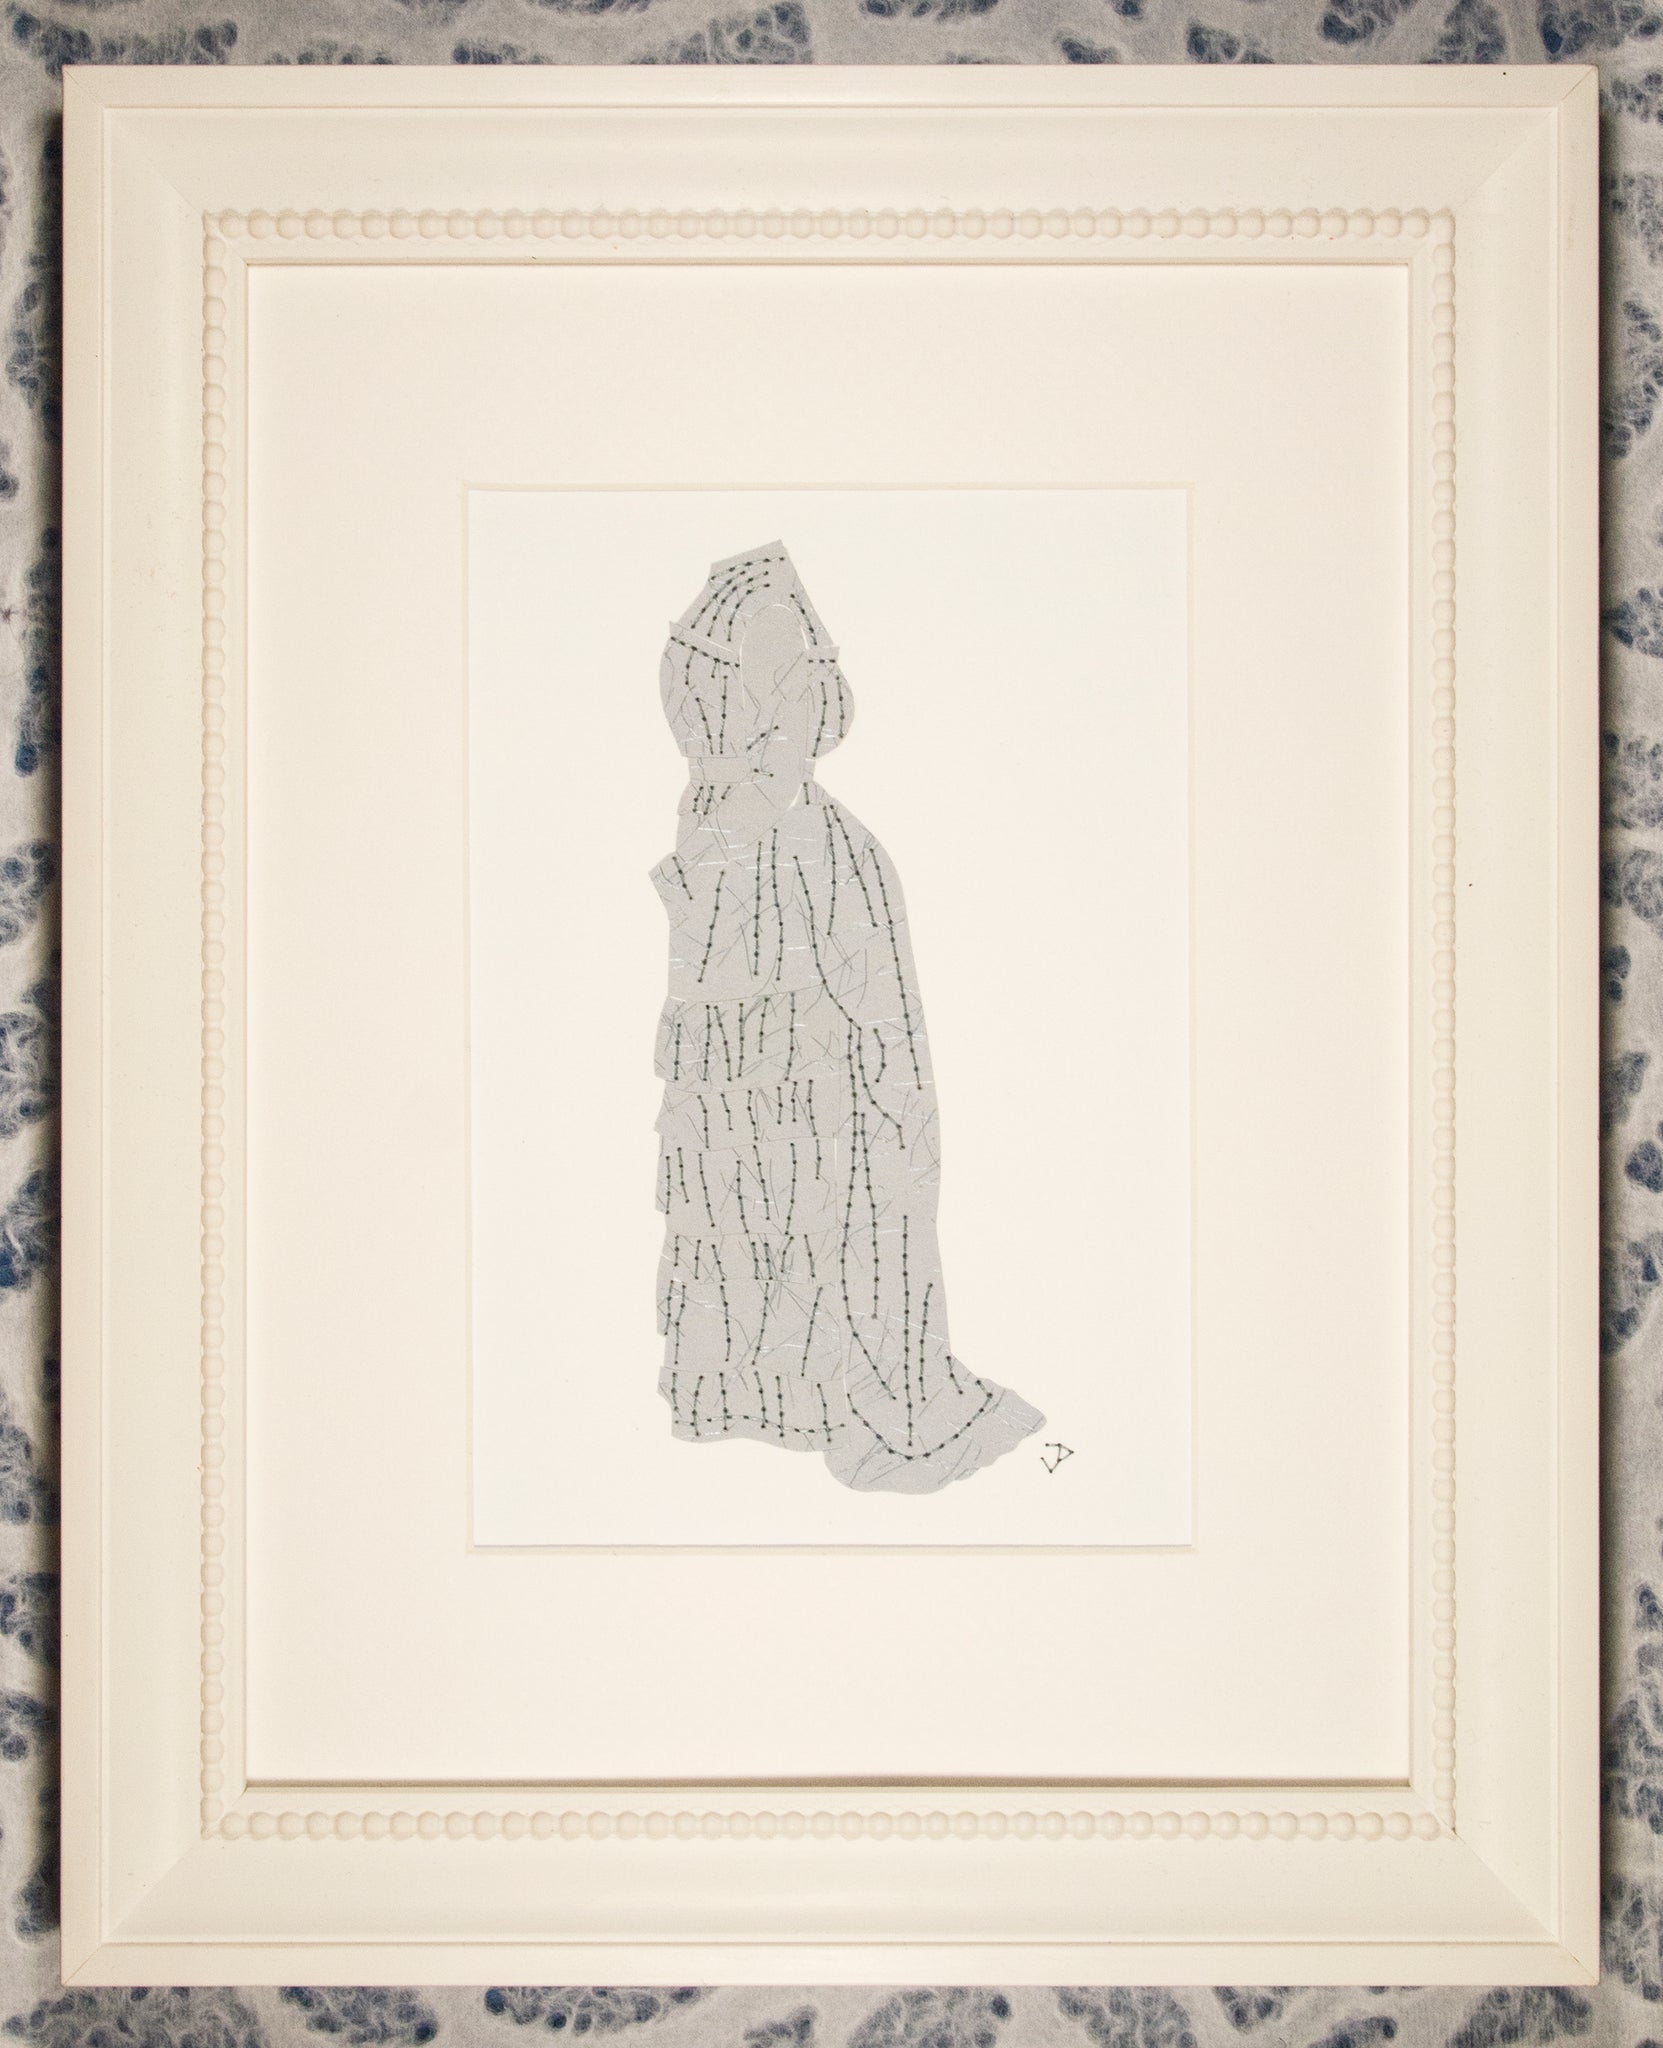 Dress #040: Victorian dress in grey